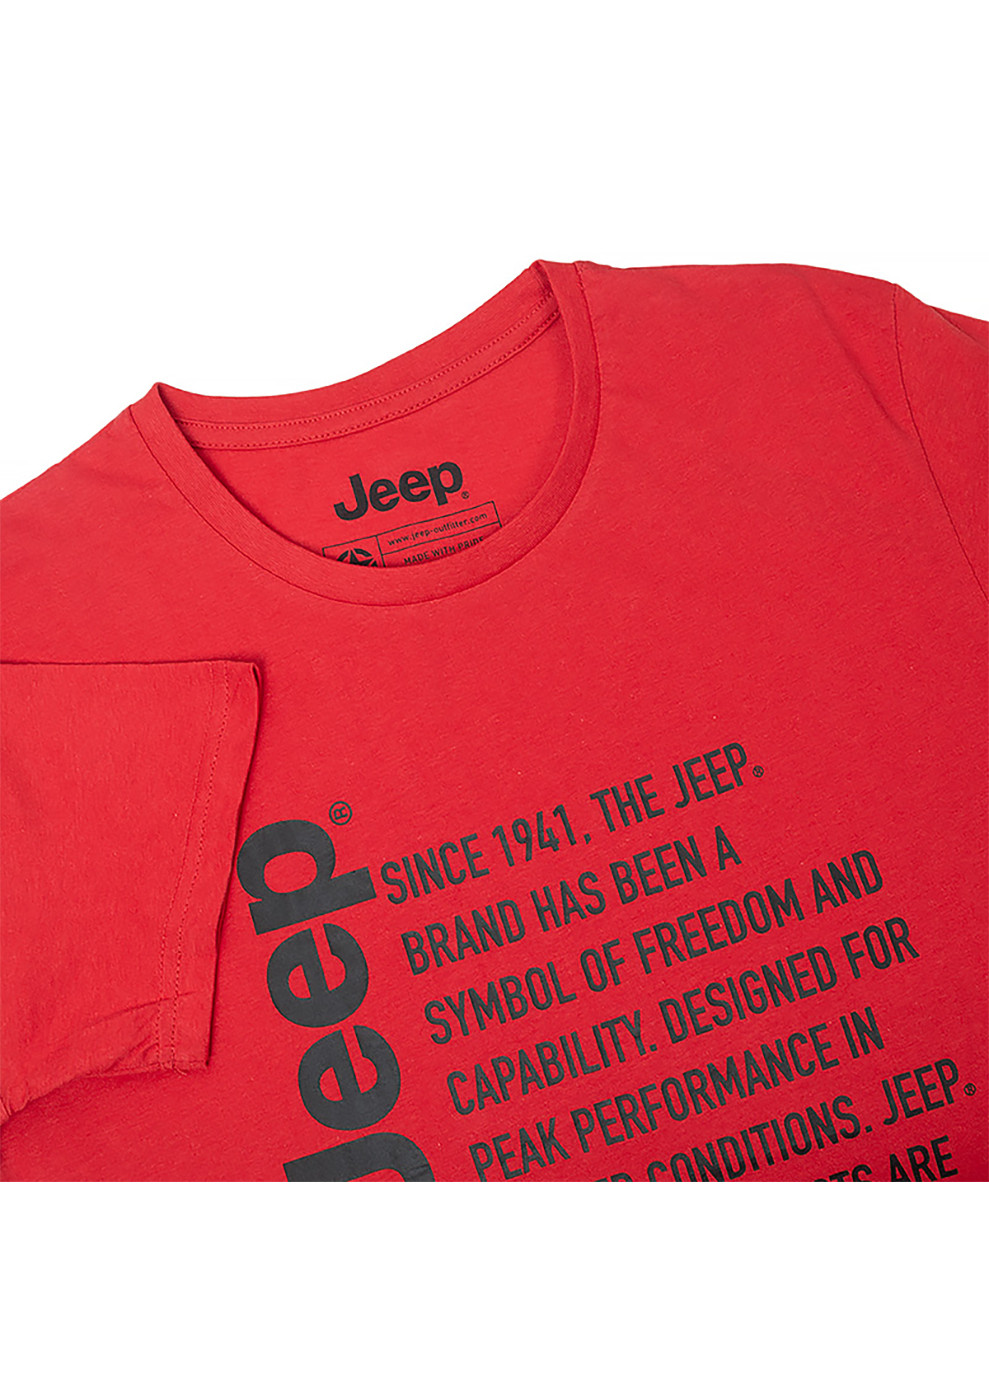 Красная мужская футболка t-shirt since 1941 красный xl (o102591-r699 xl) Jeep